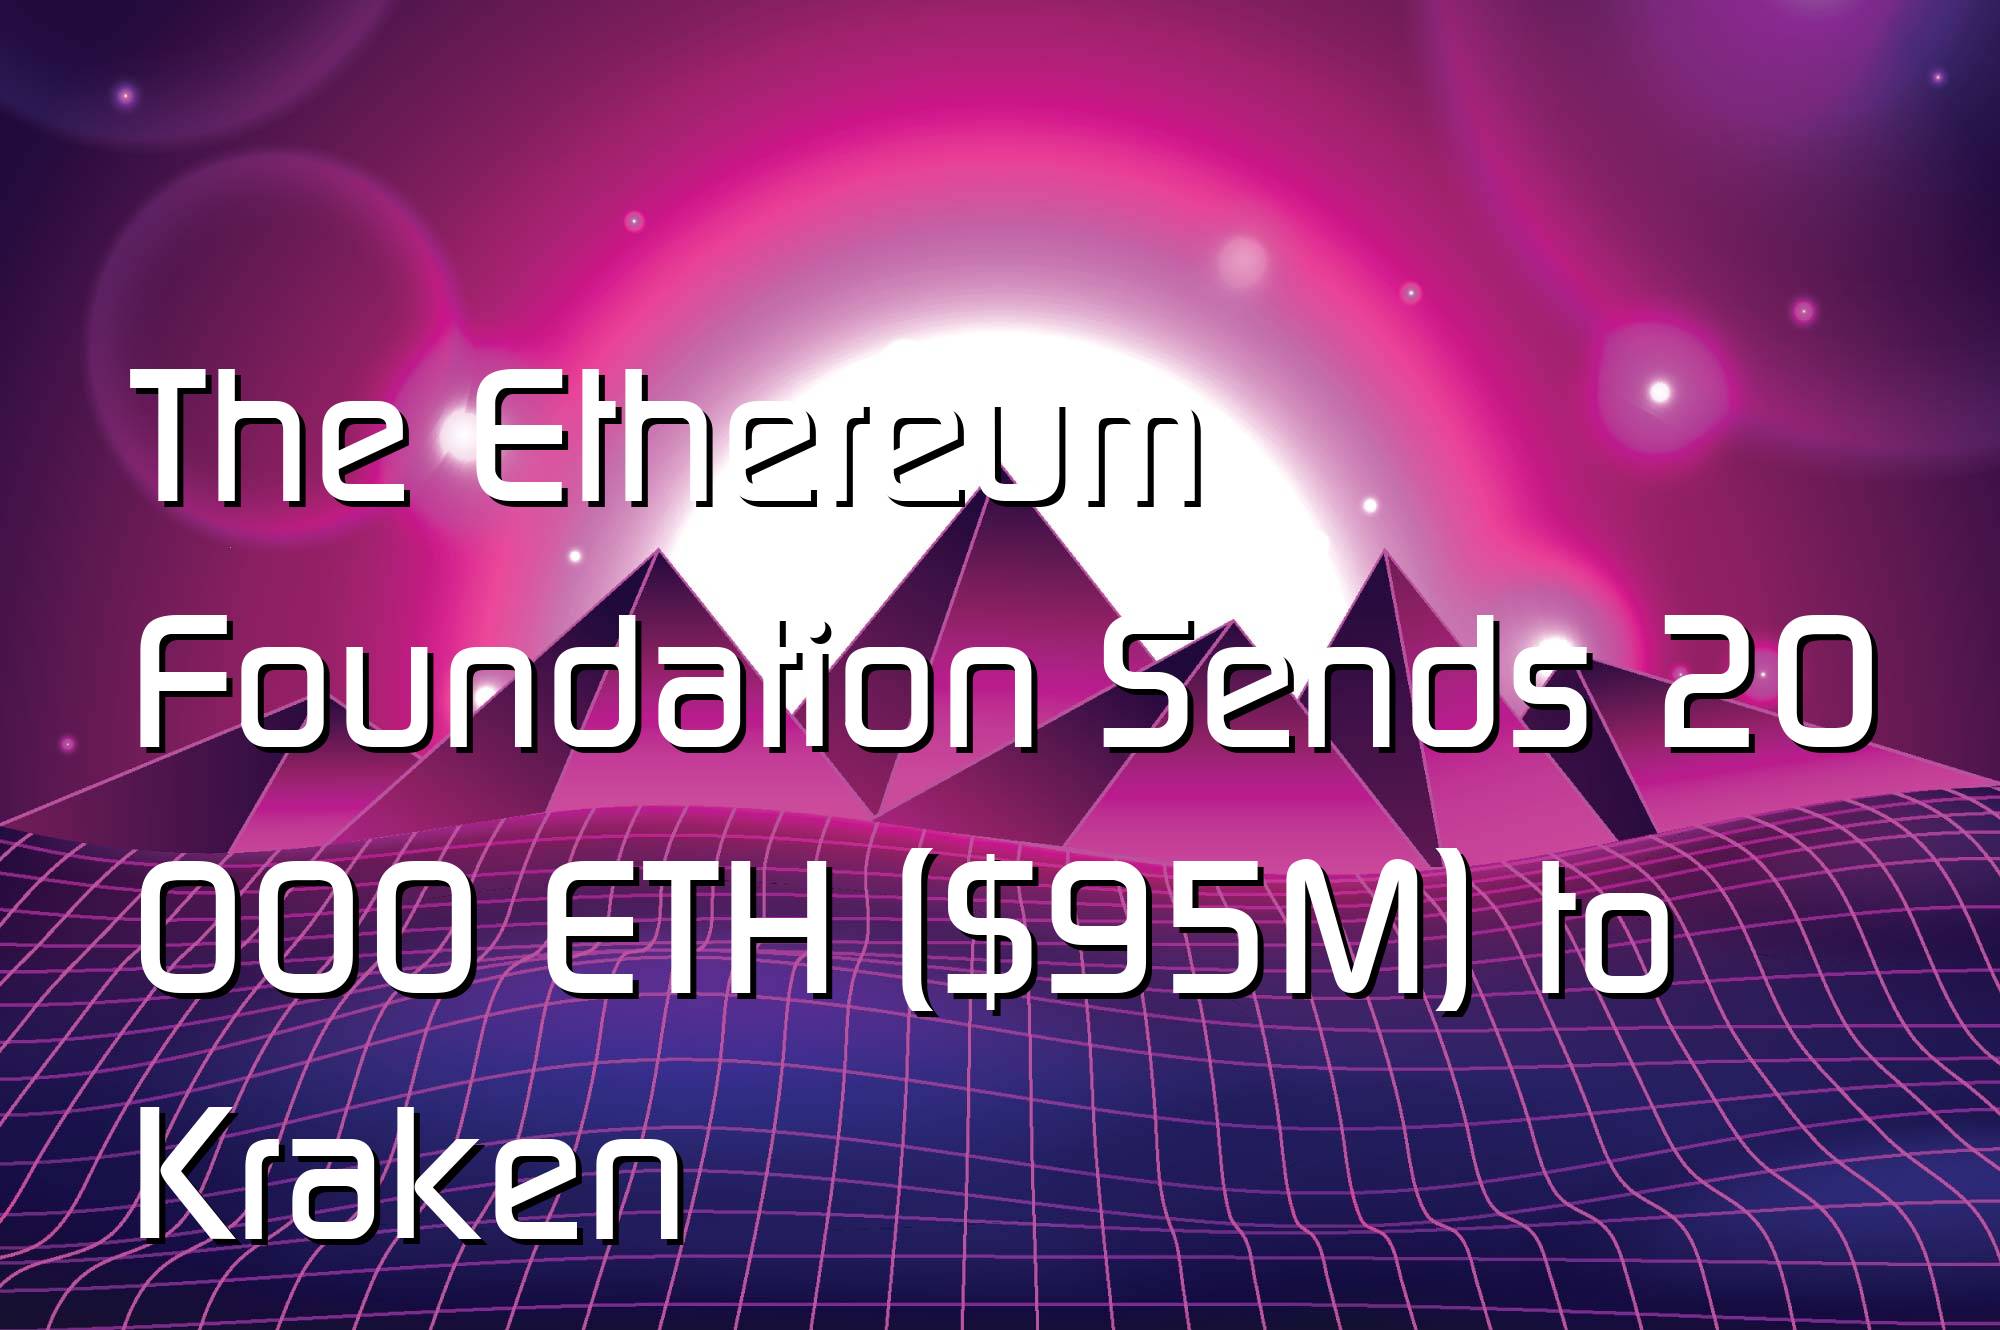 @$65241: The Ethereum Foundation Sends 20 000 ETH ($95M) to Kraken